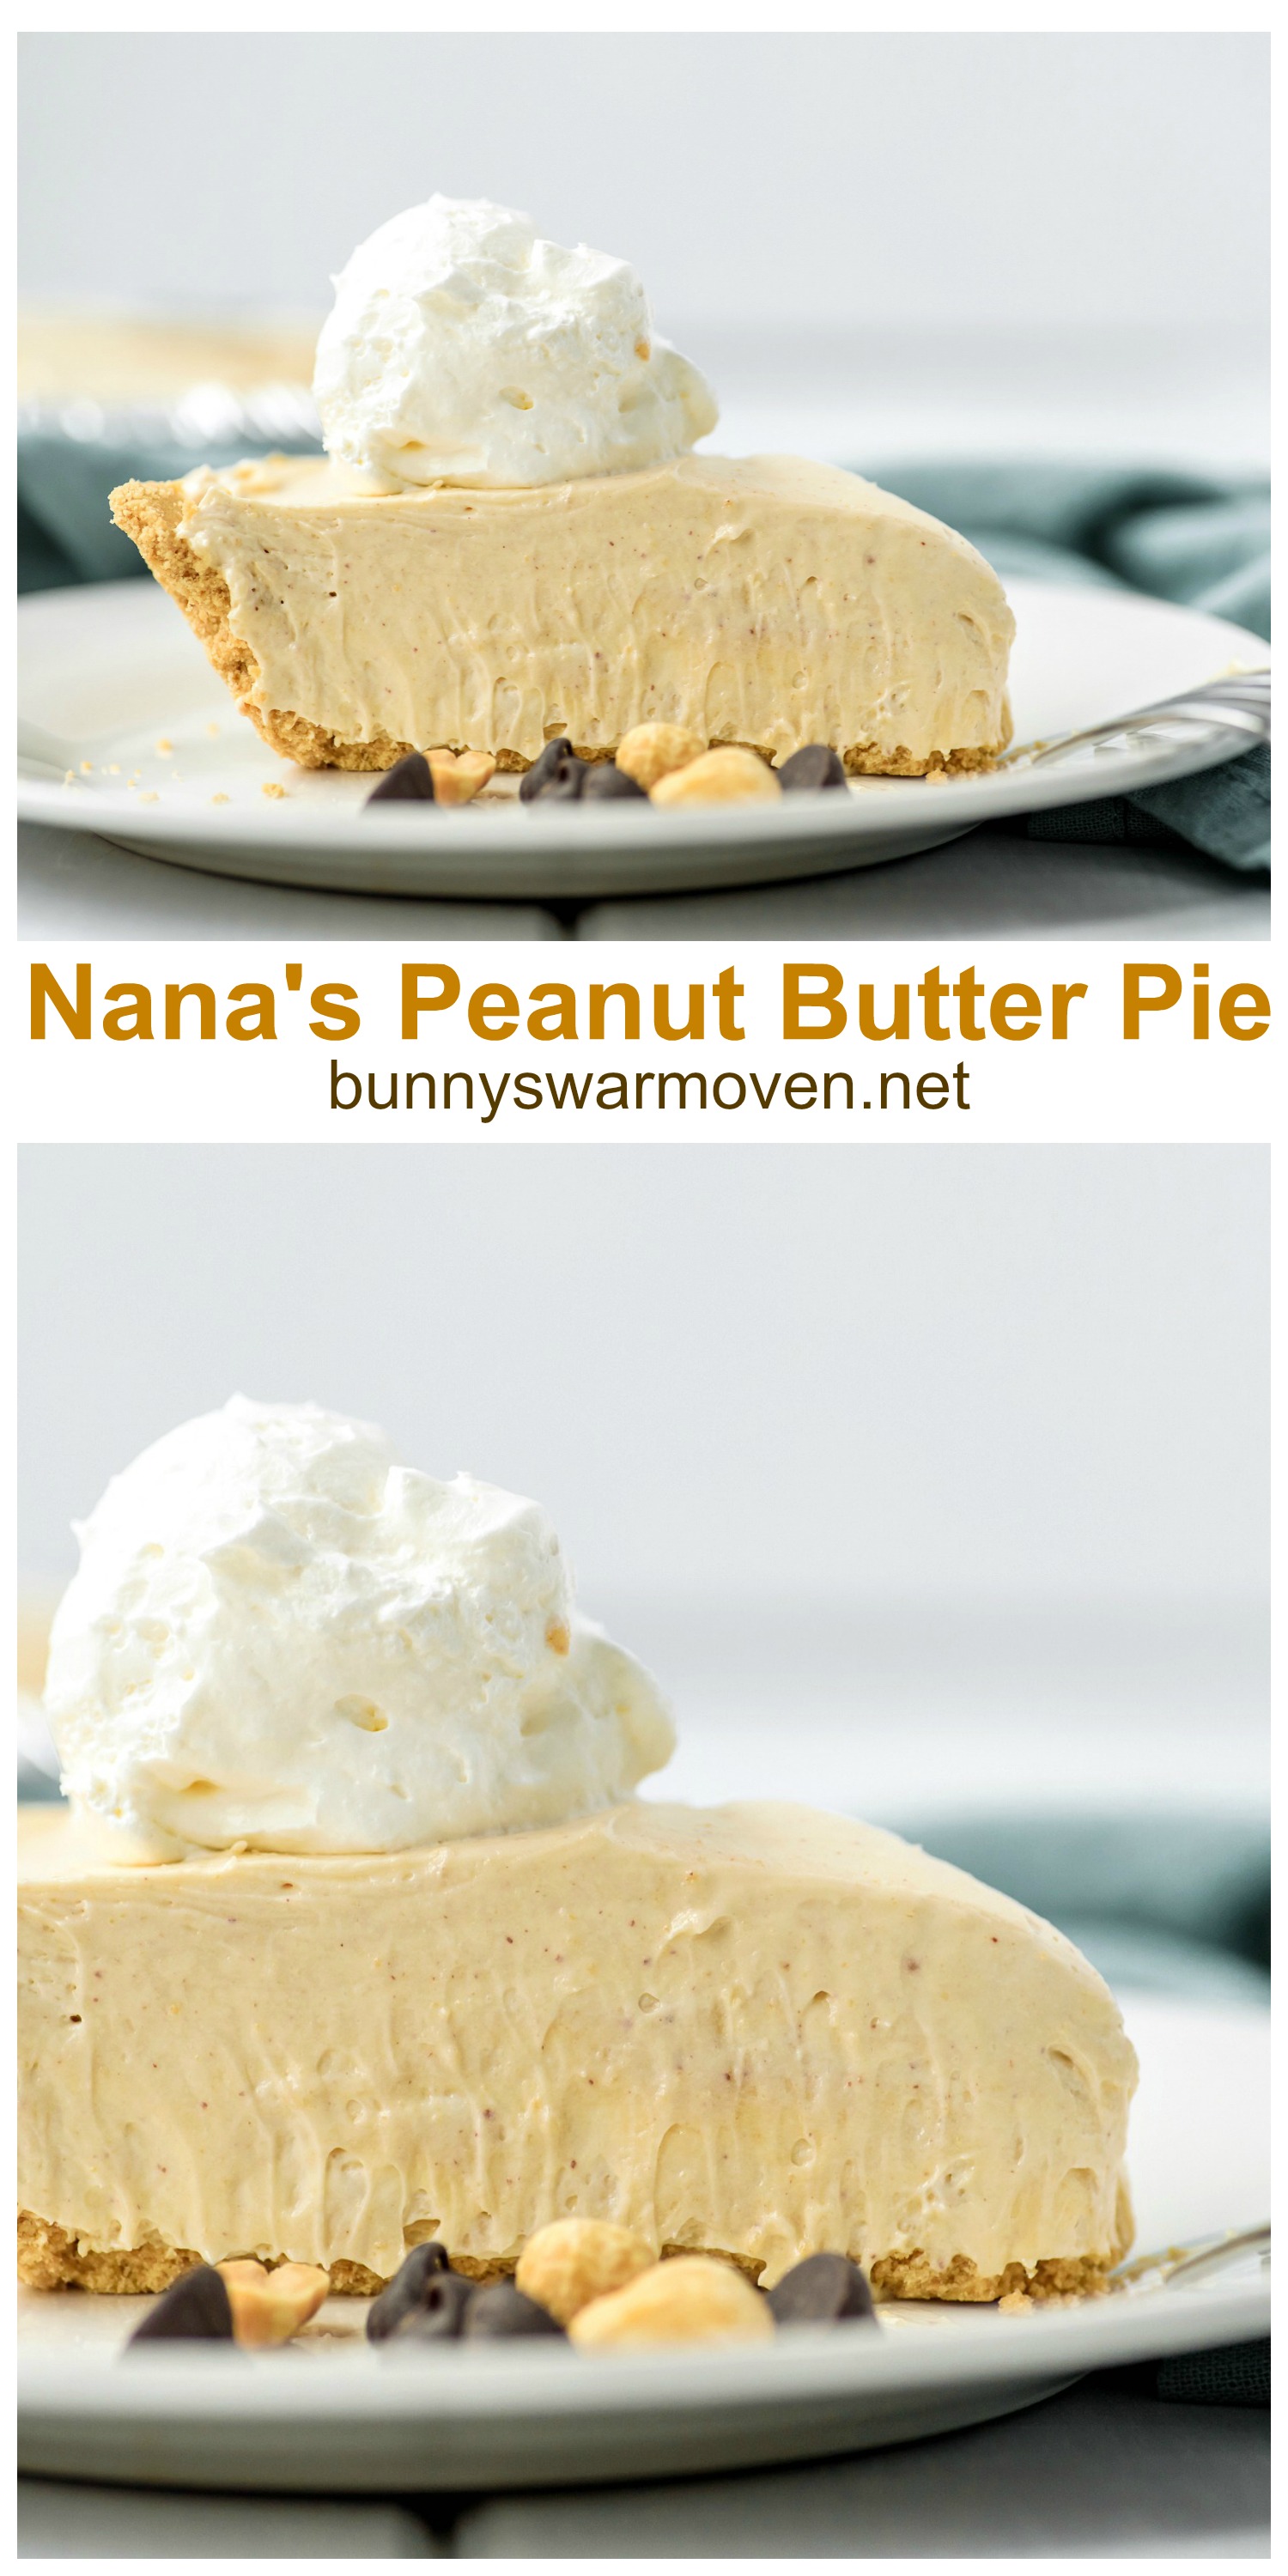 Nana's Peanut Butter Pie